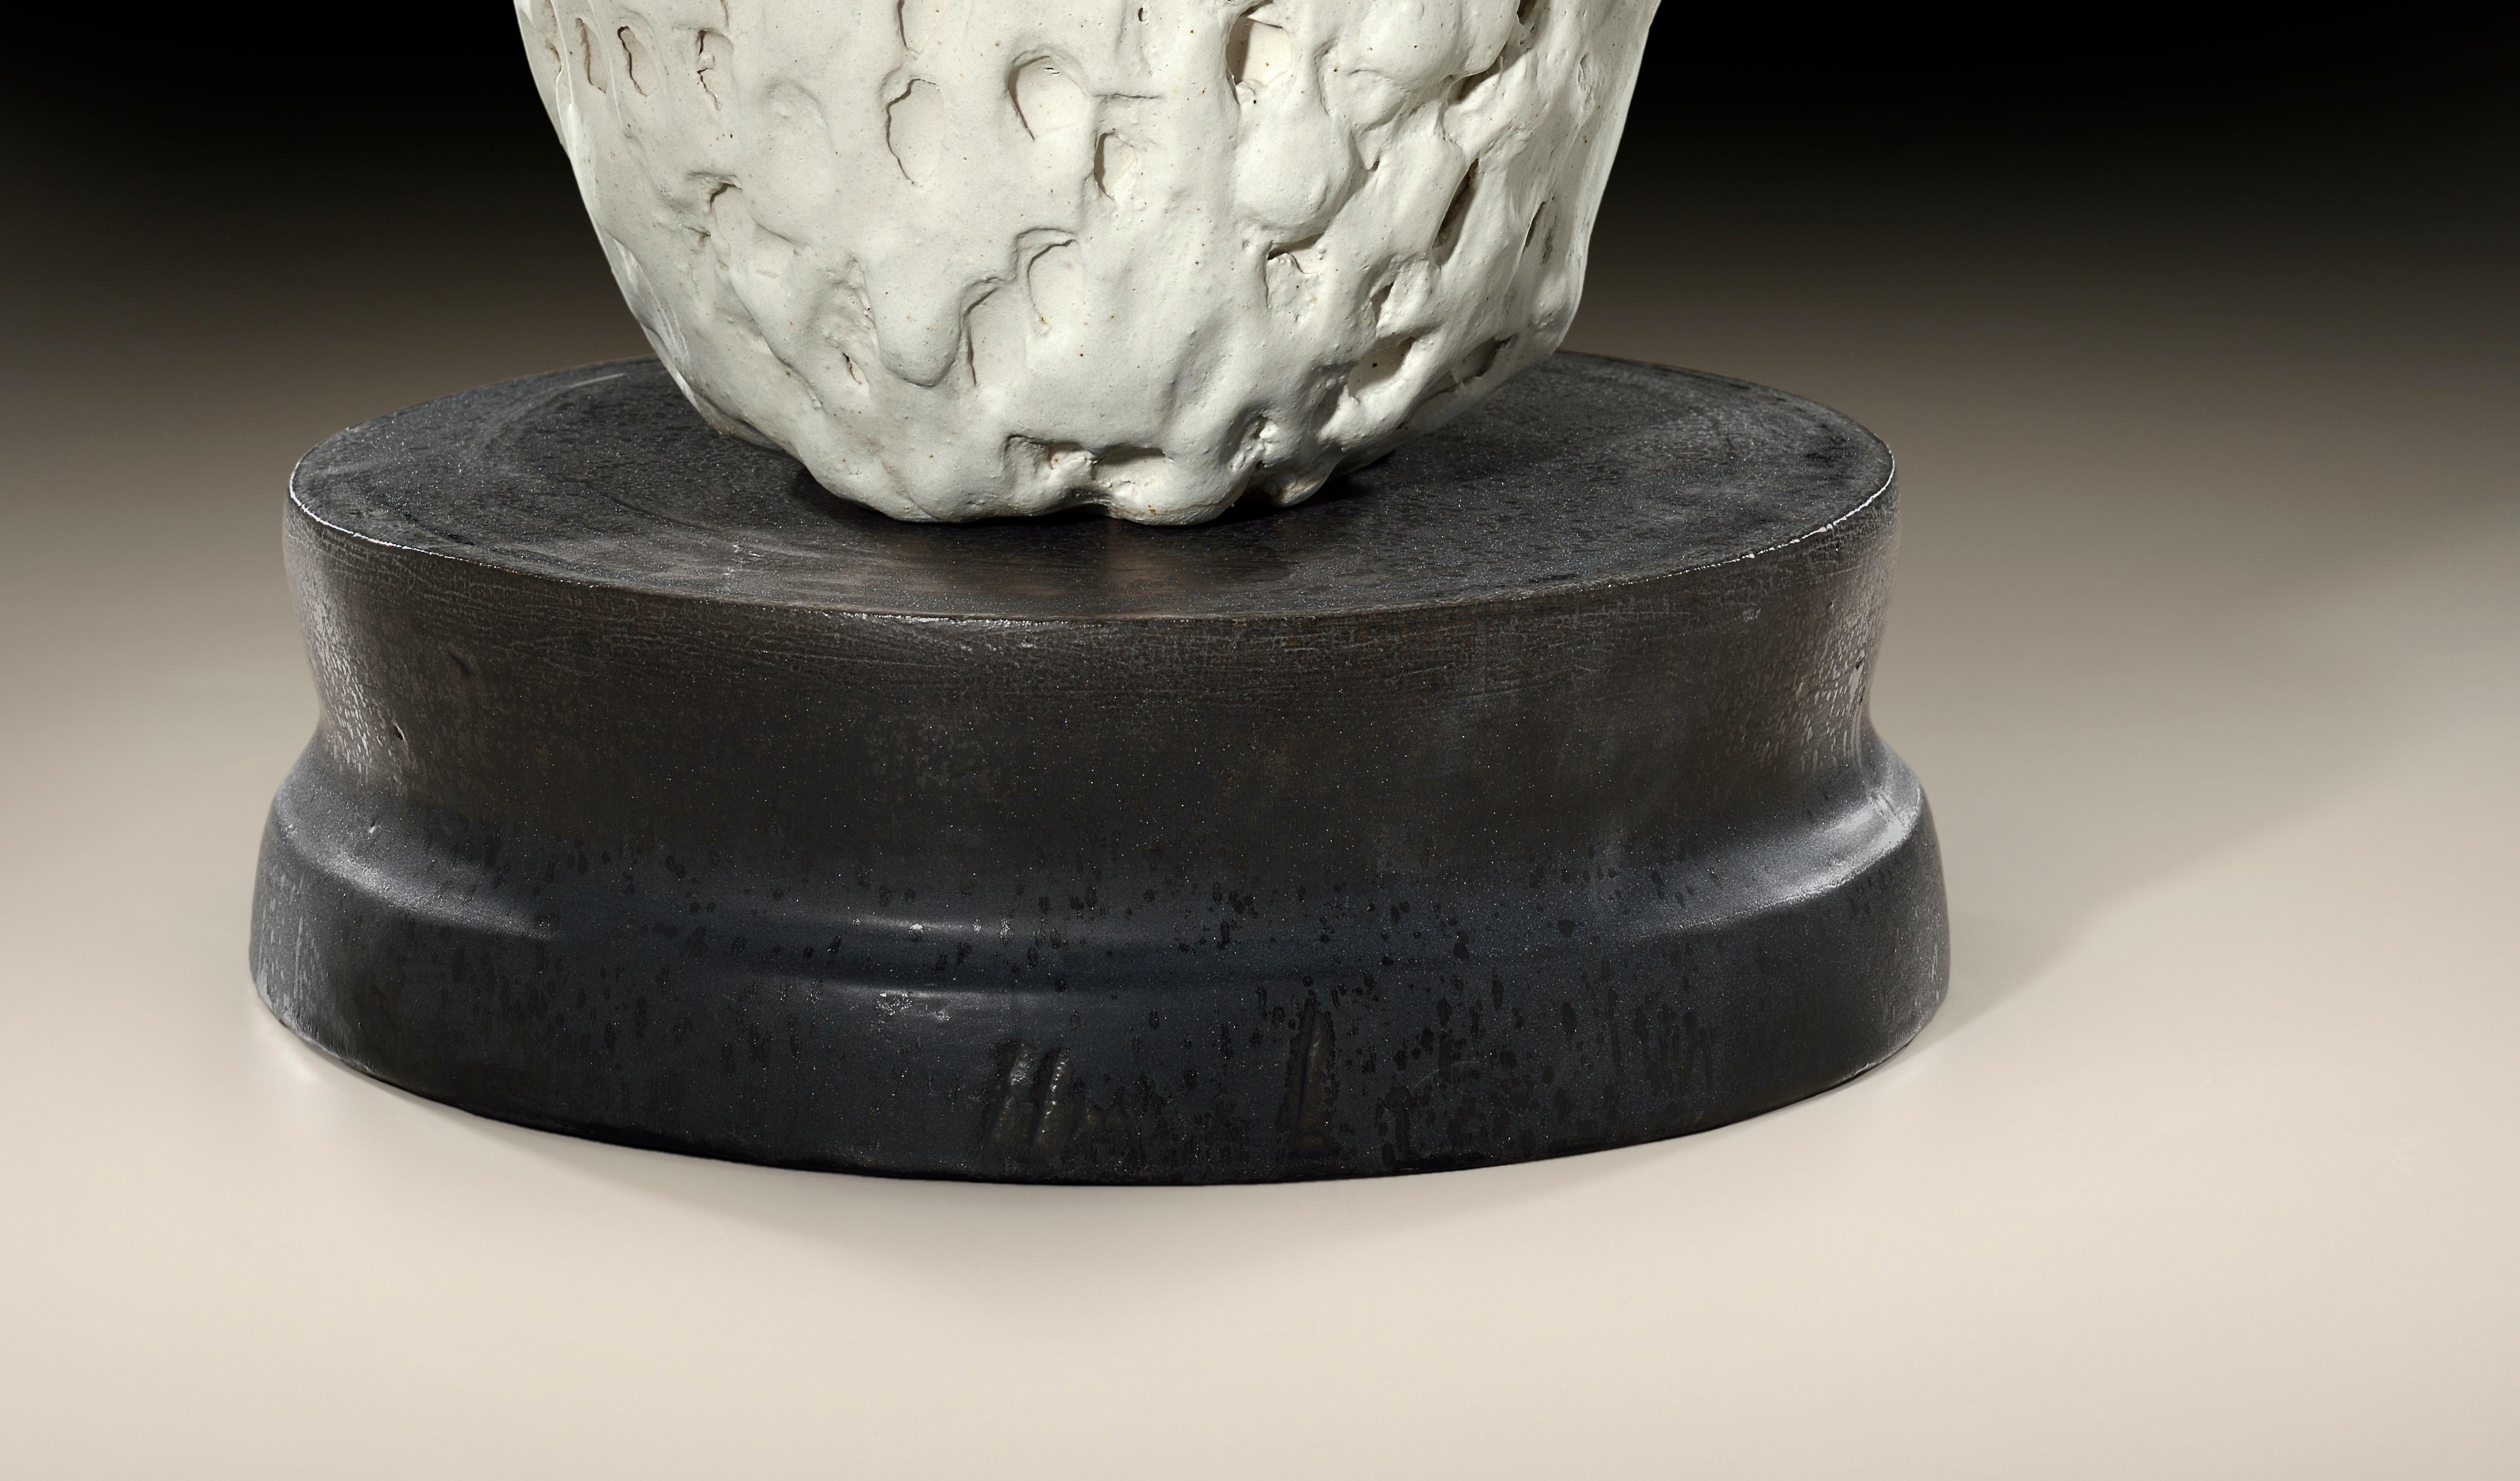 Contemporary Richard Hirsch Ceramic Mortar and Glass Pestle Sculpture #1, 2020 For Sale